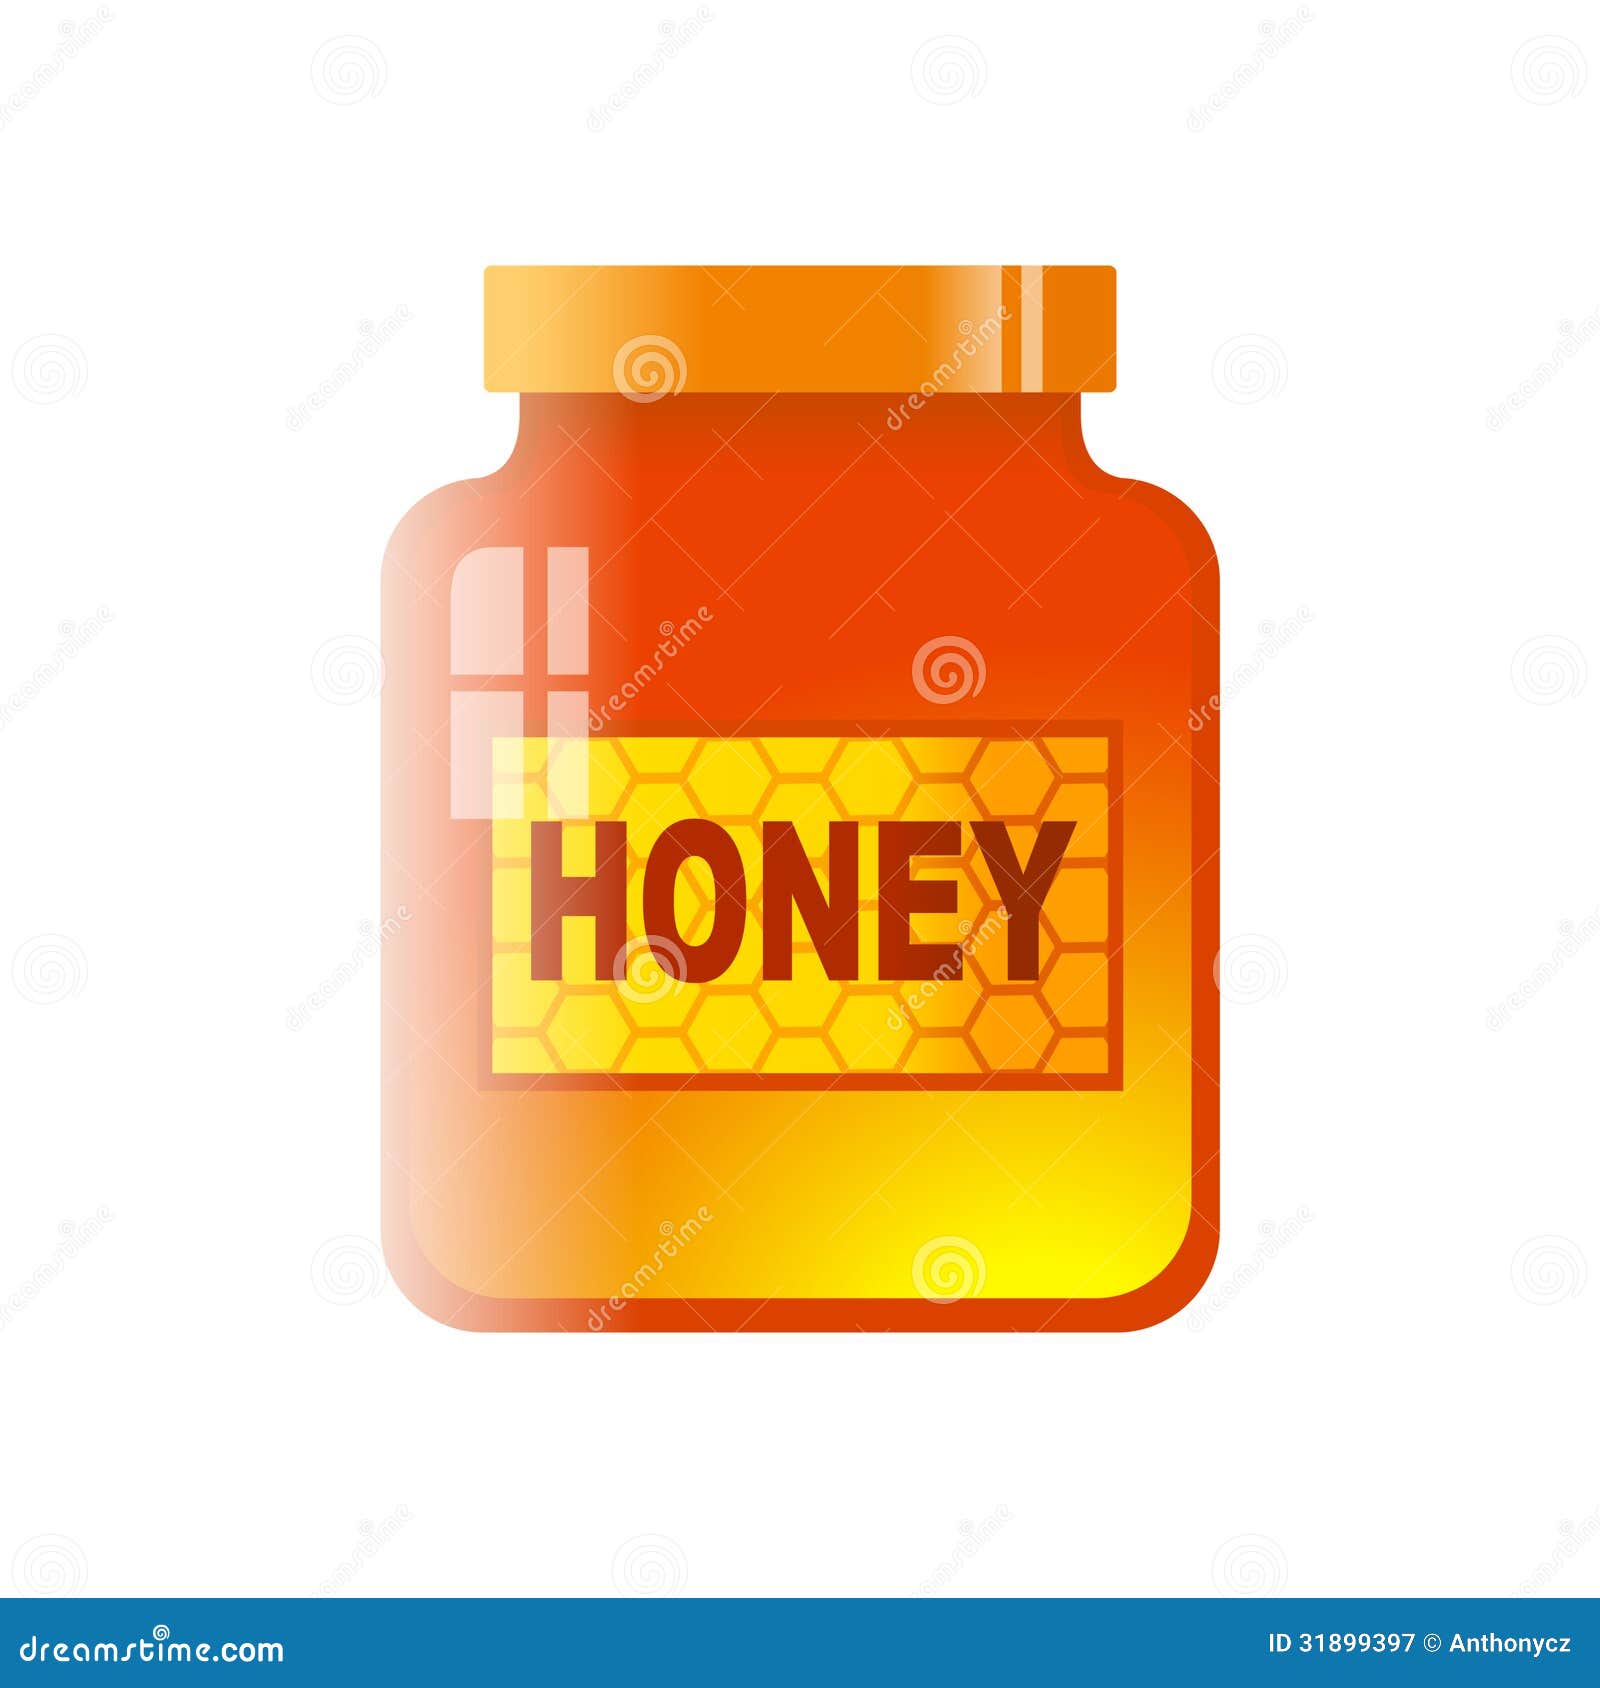 clipart honey jar - photo #40